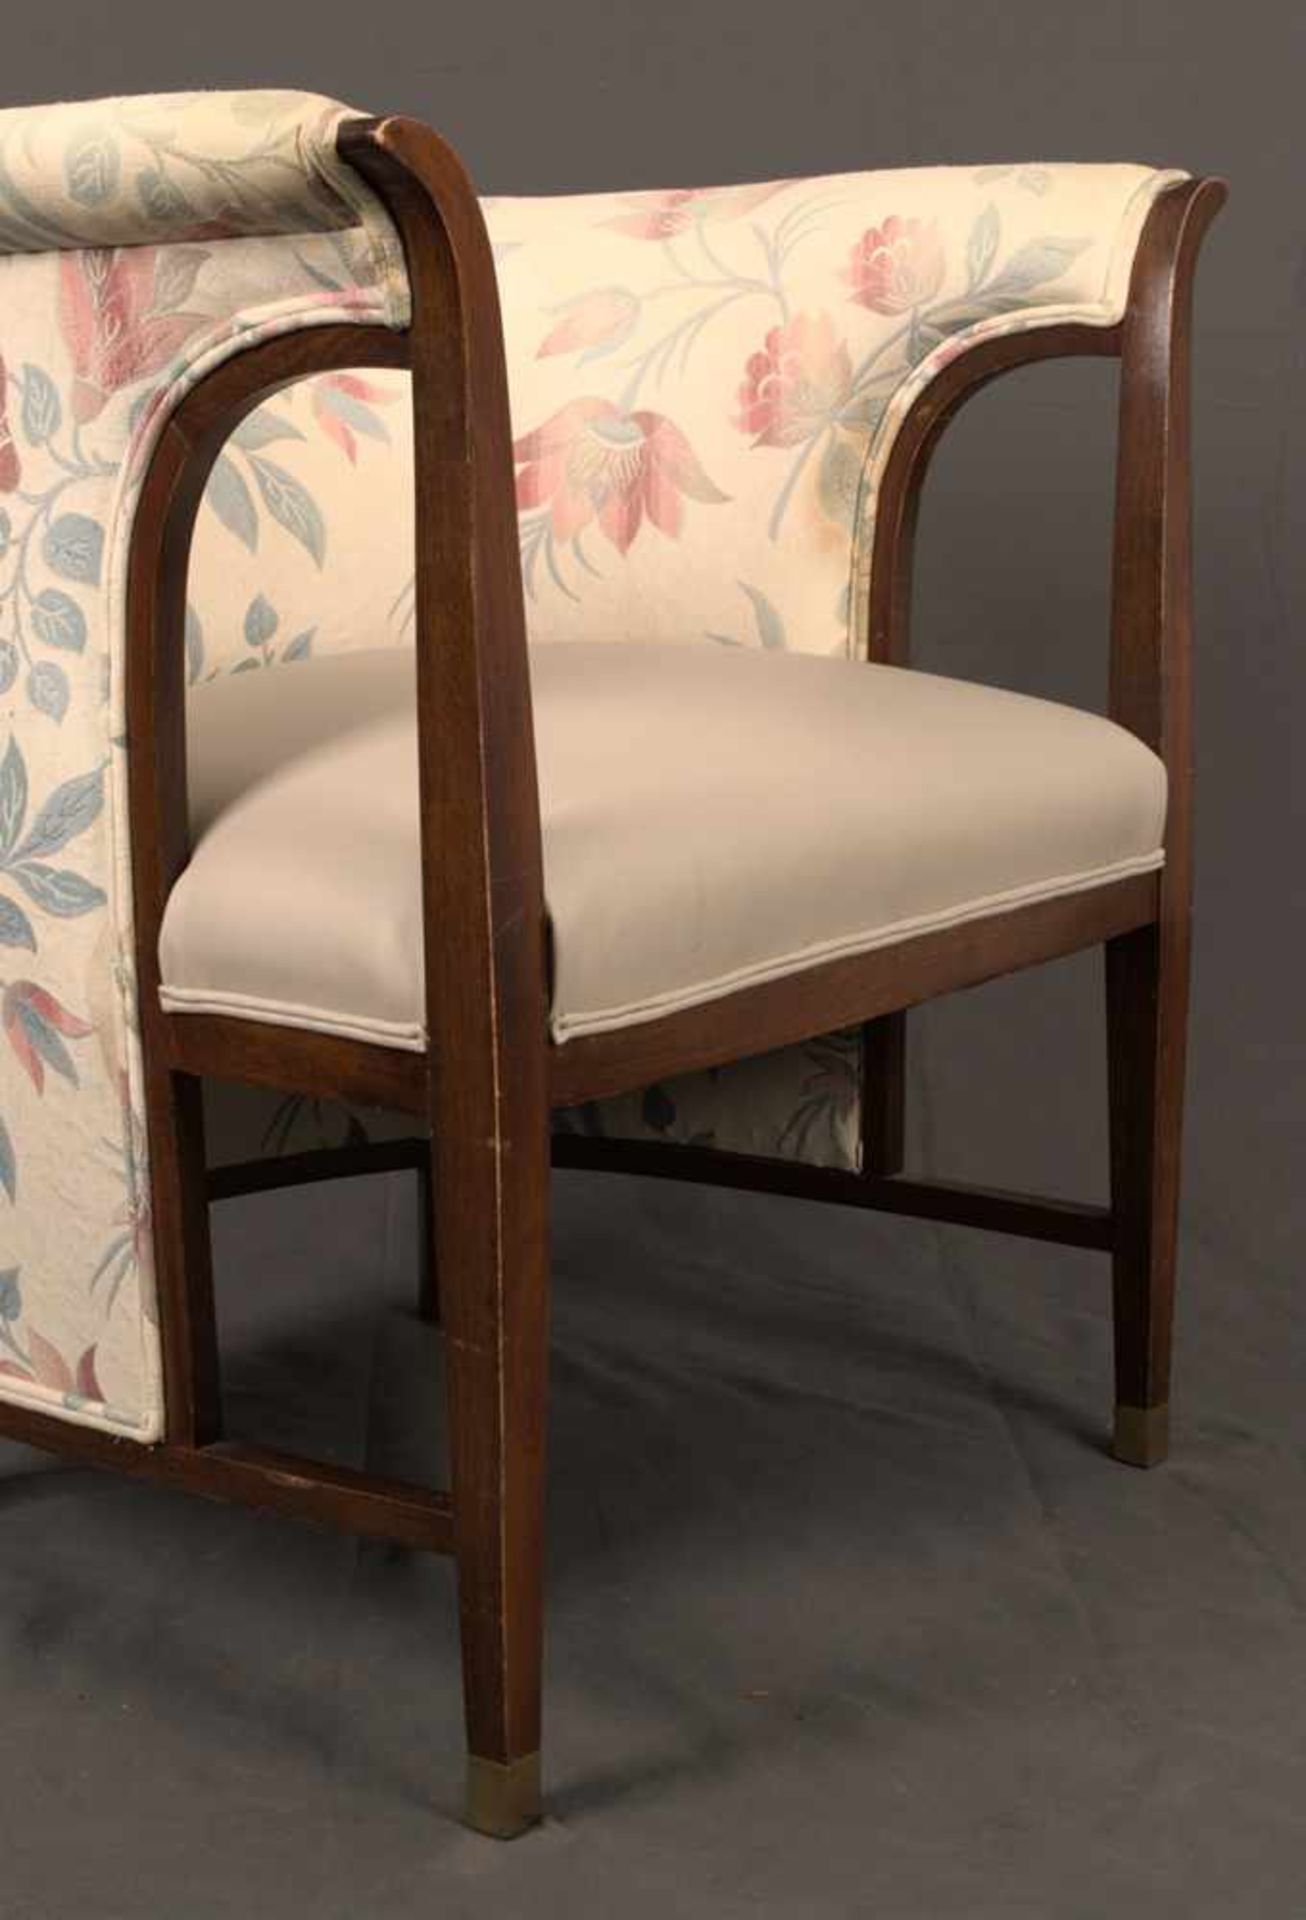 Wiener Polstersessel, hufeisenförmiges, gepolstertes Sesselgestell mit geraden, knatigen Beinen (die - Image 7 of 19